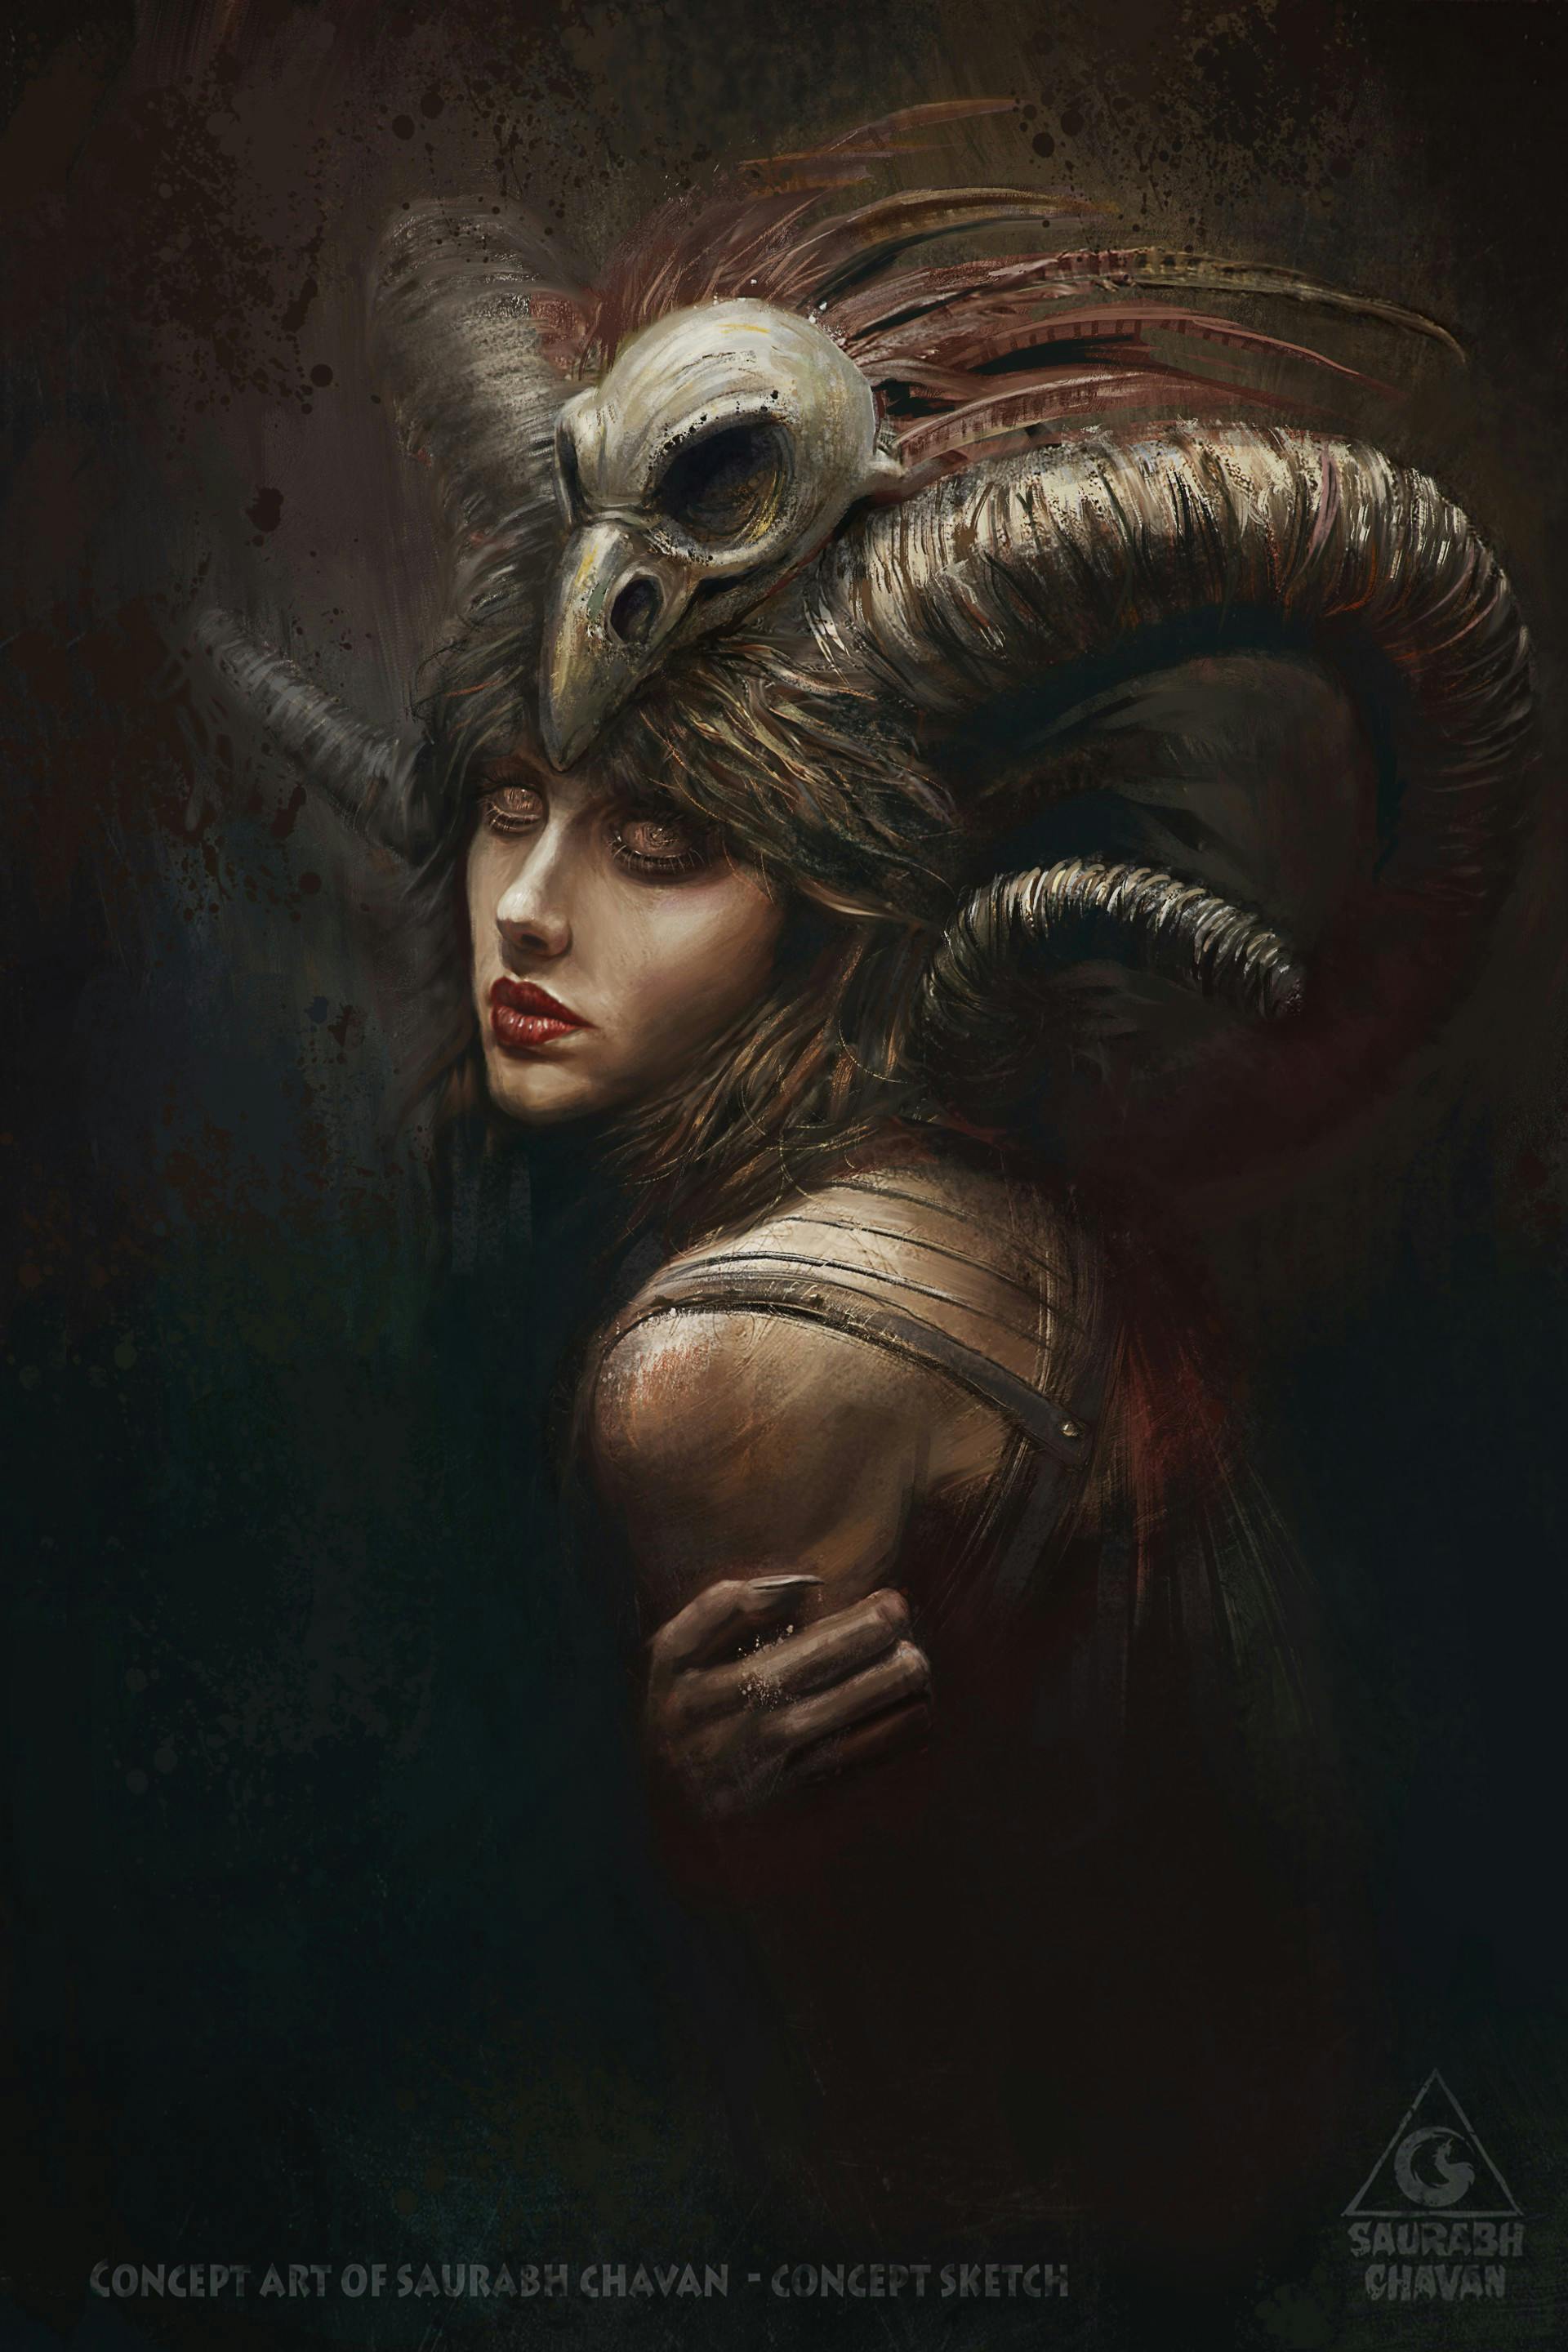 Woman with skull headdress